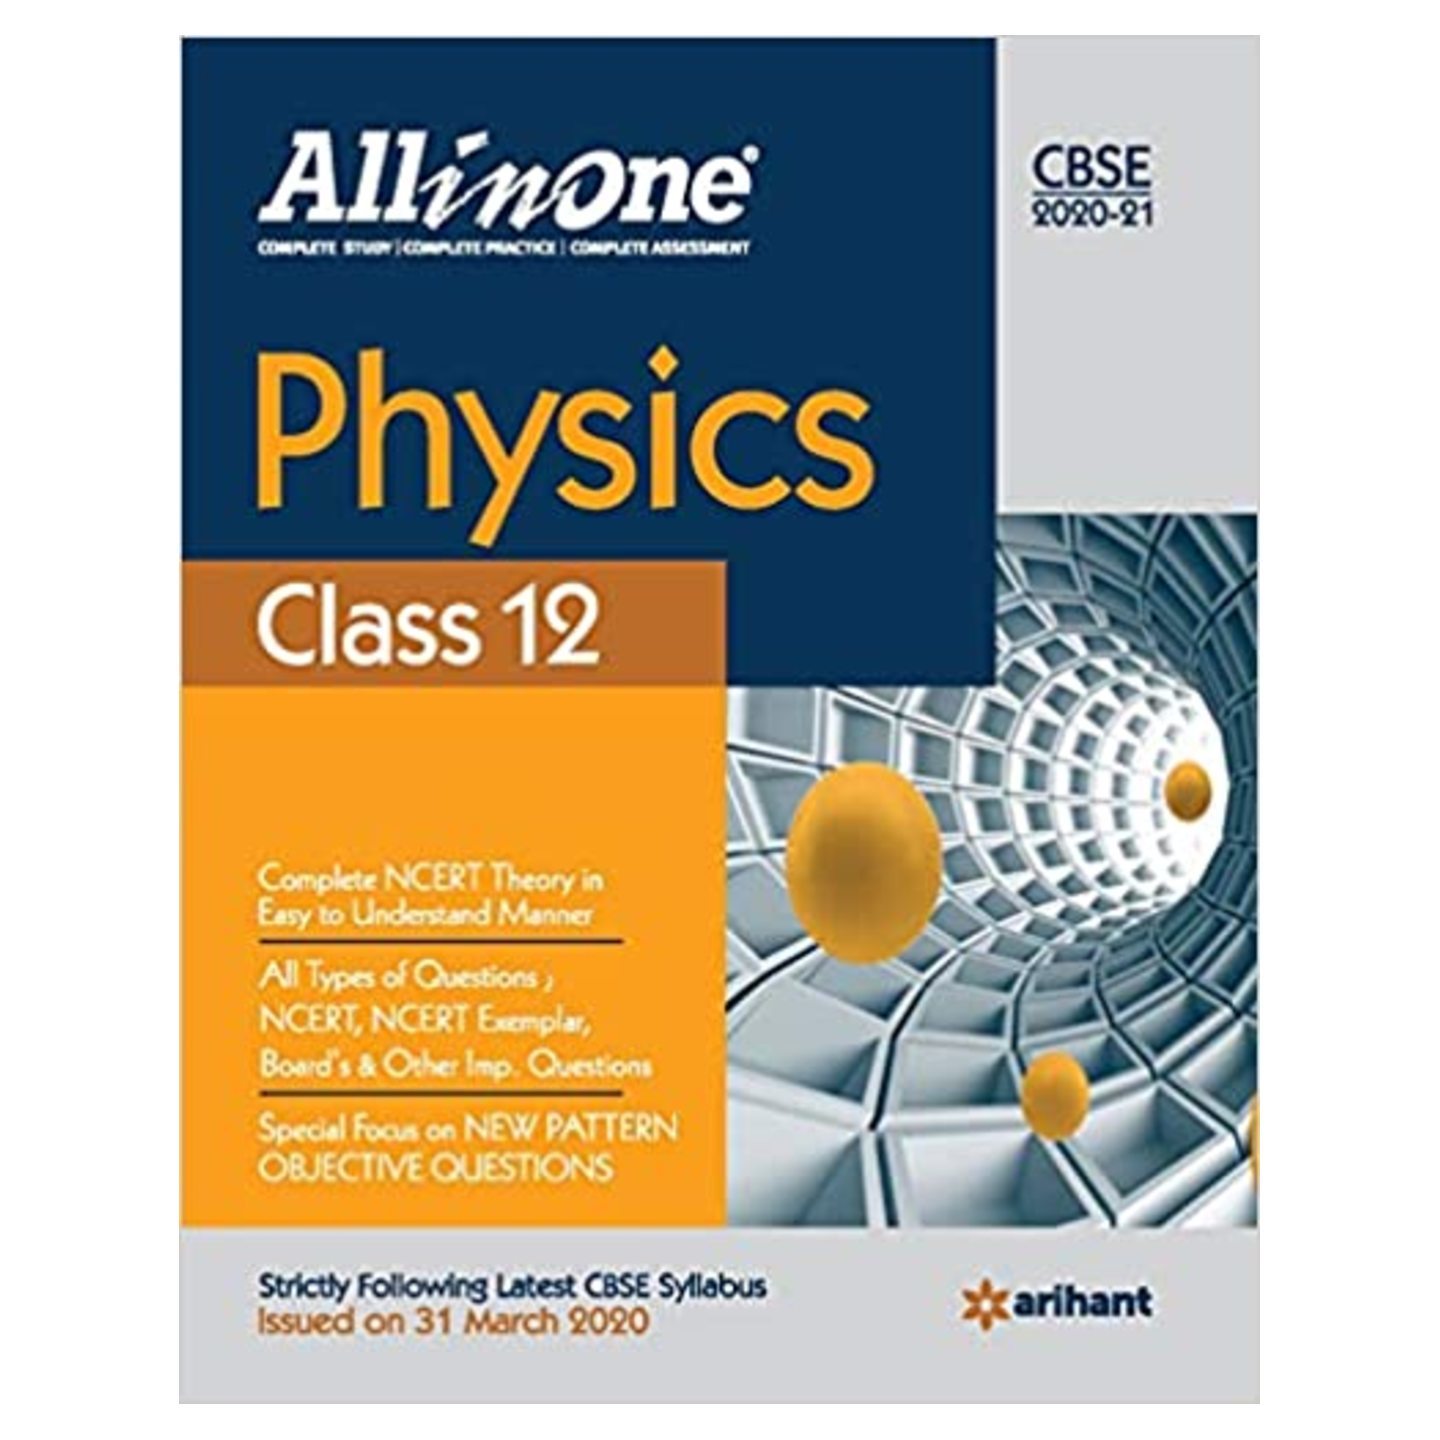 CBSE All In One Physics Class 12 ARIHANT